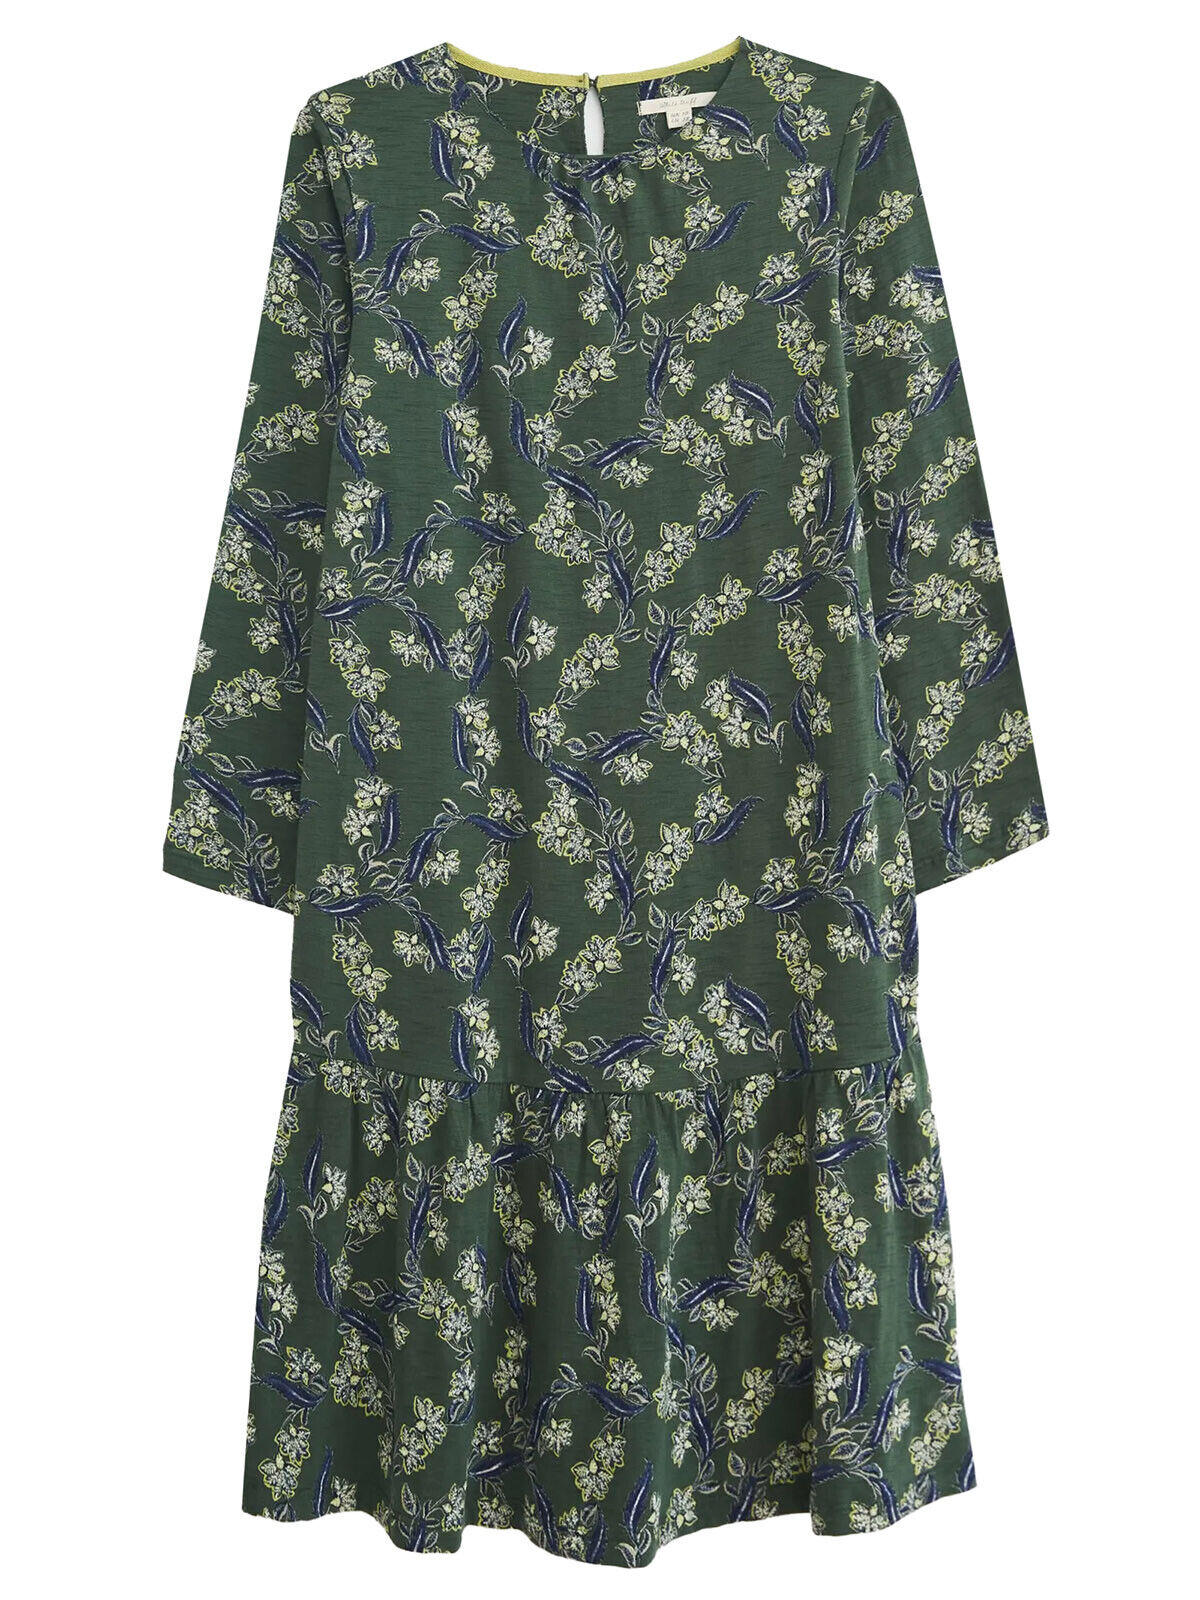 EX White Stuff Green Multi Perri Fairtrade Tiered Hem Dress 10 or 12 RRP £59